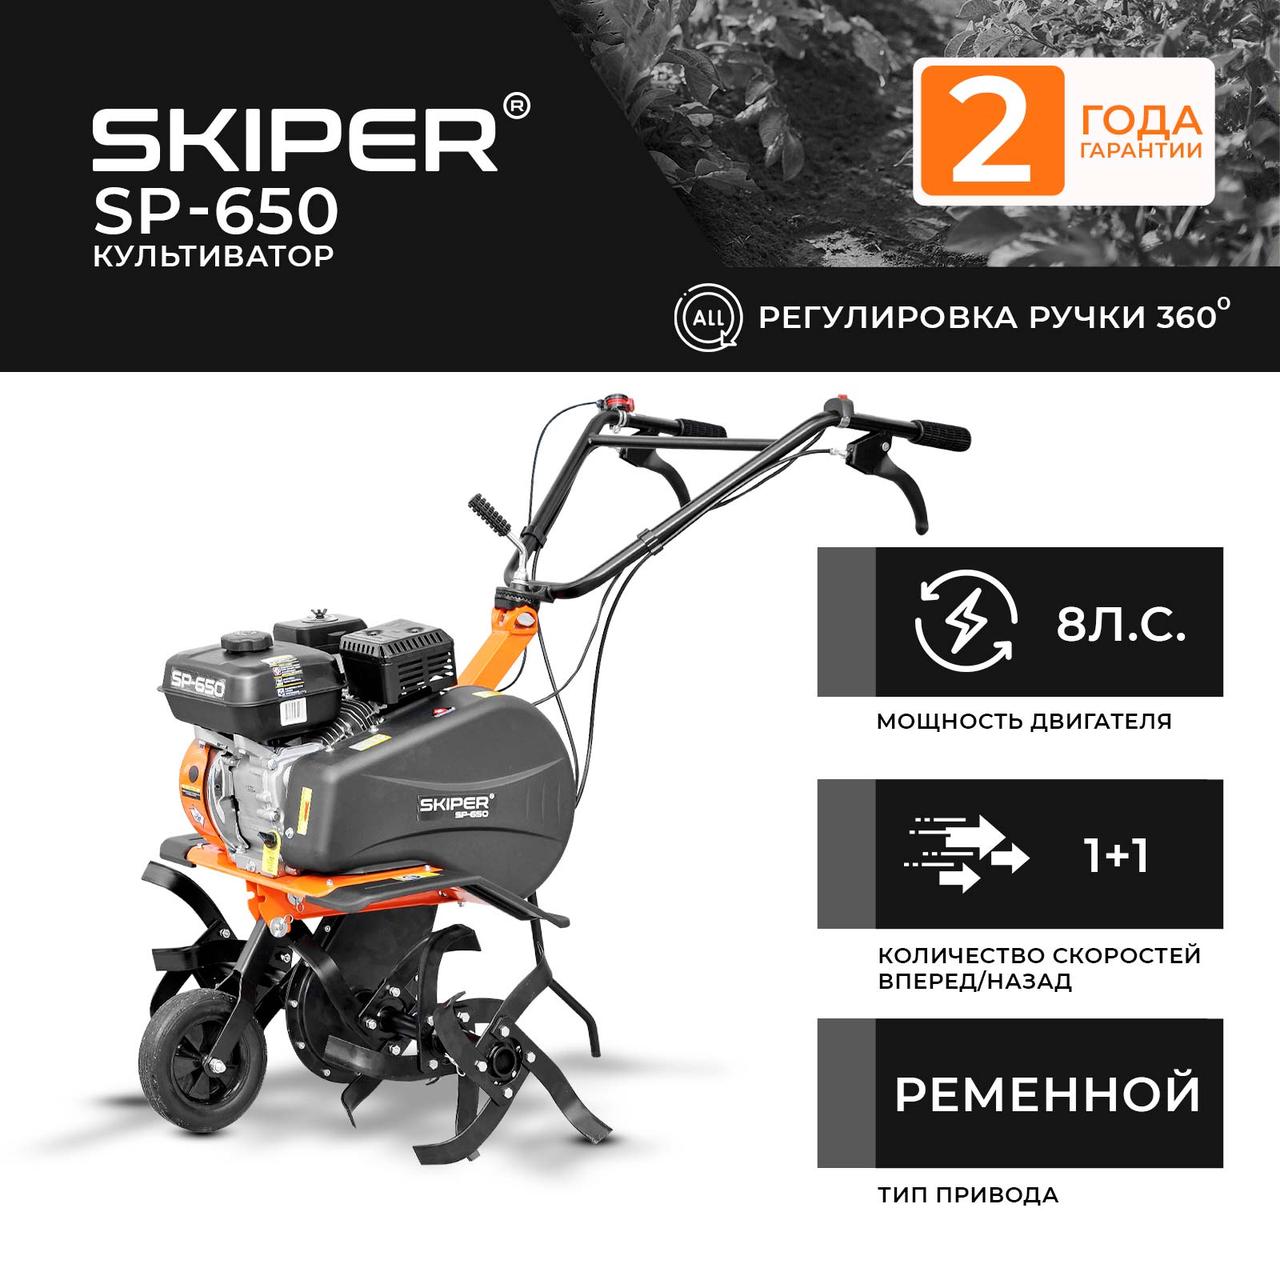 Культиватор SKIPER  SP-650  (8 л.с., без ВОМ, передач 1+1, 2 года гарантии, поворотная ручка)